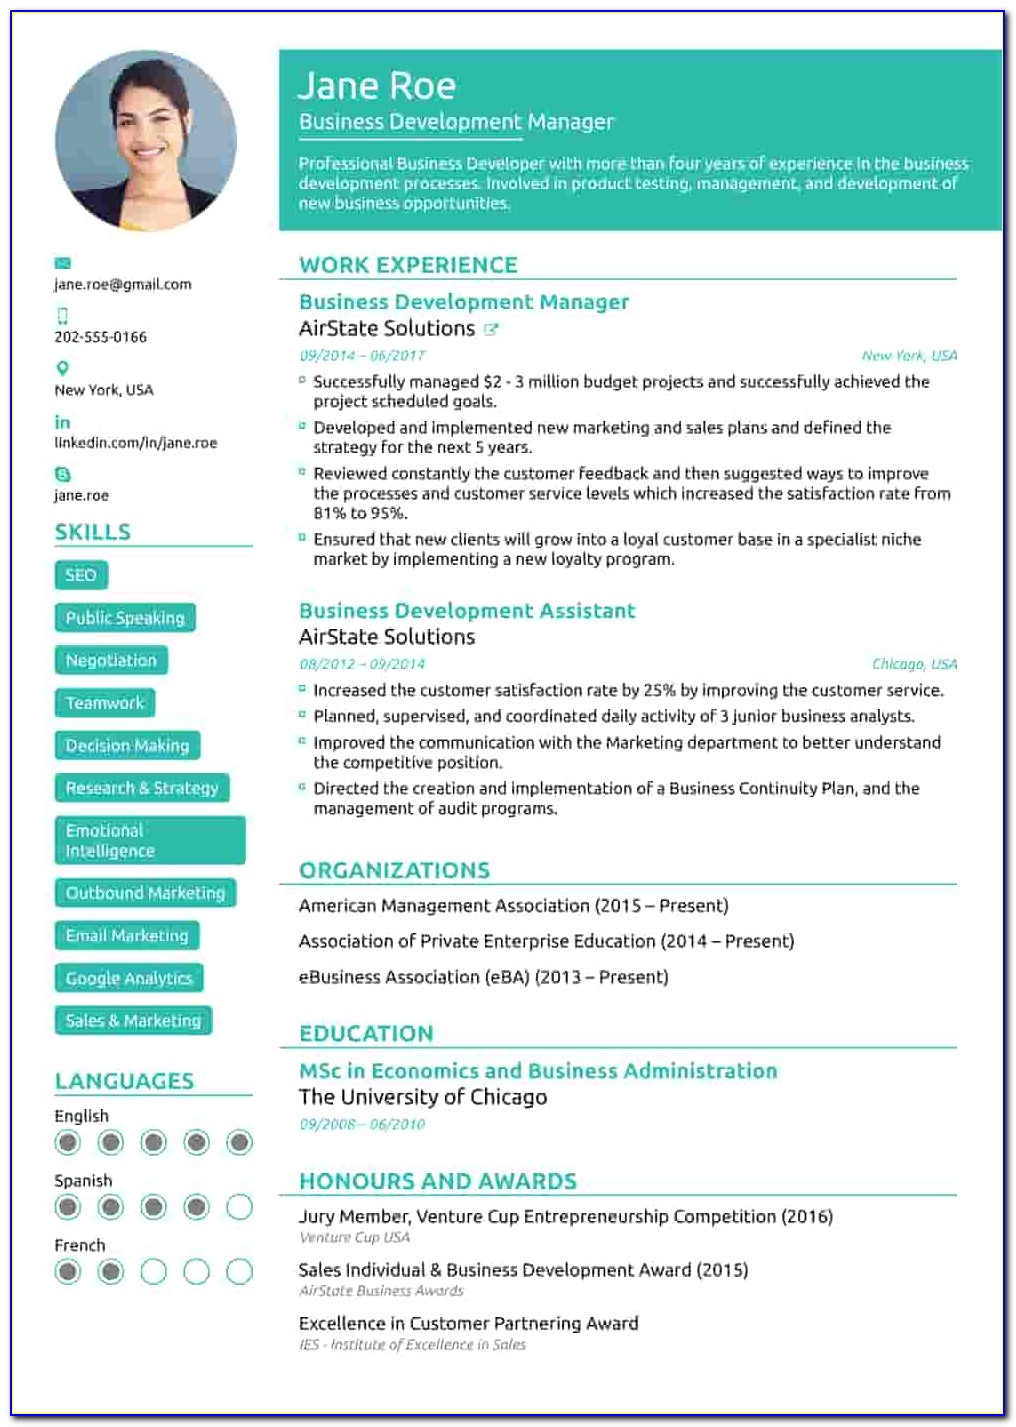 Resume Writing (cv) & Linkedin Profile Optimization